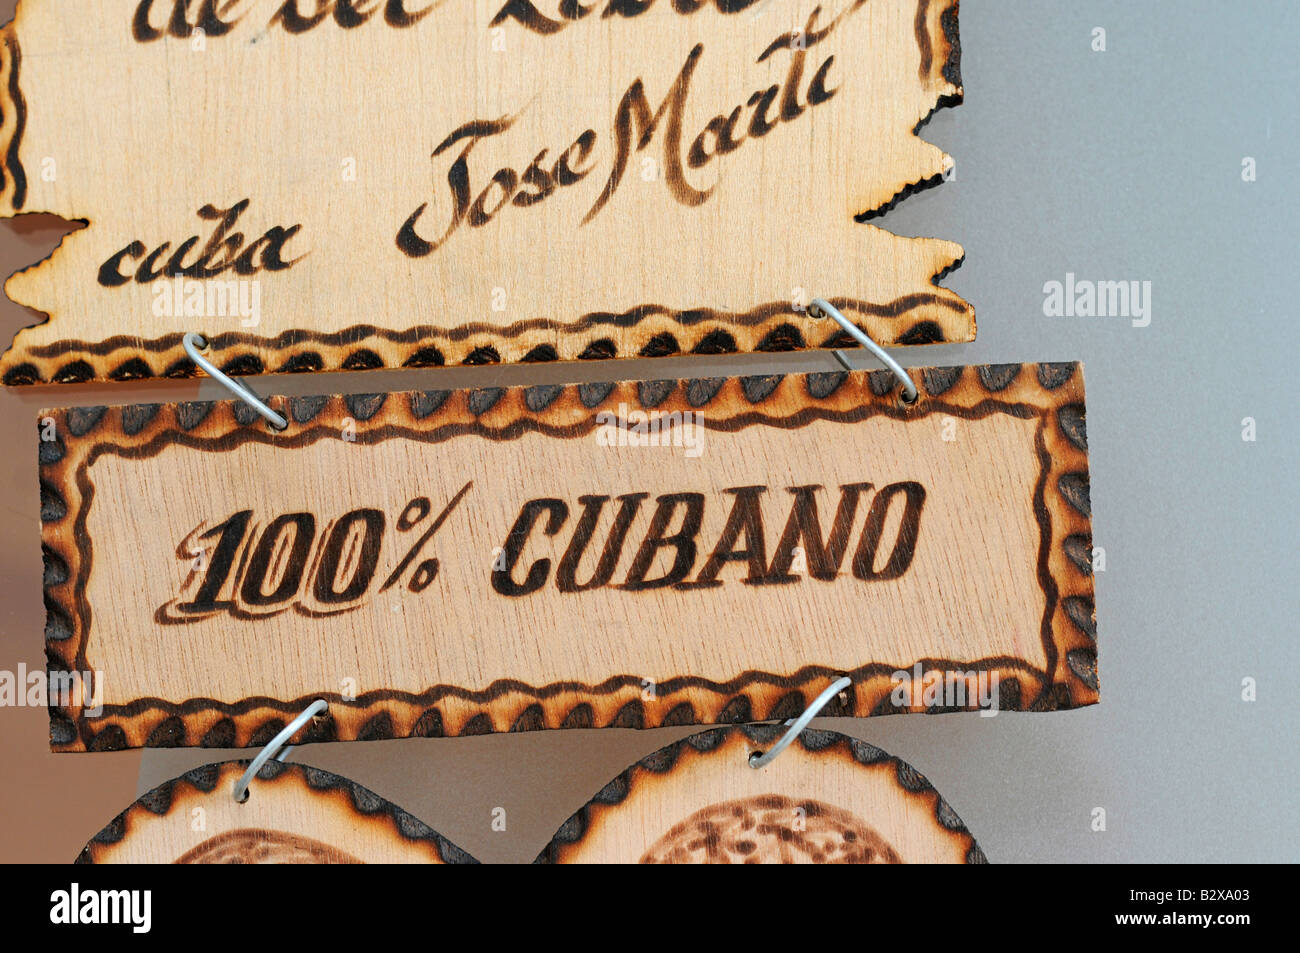 souvenir, 100 procent Cubano Stock Photo